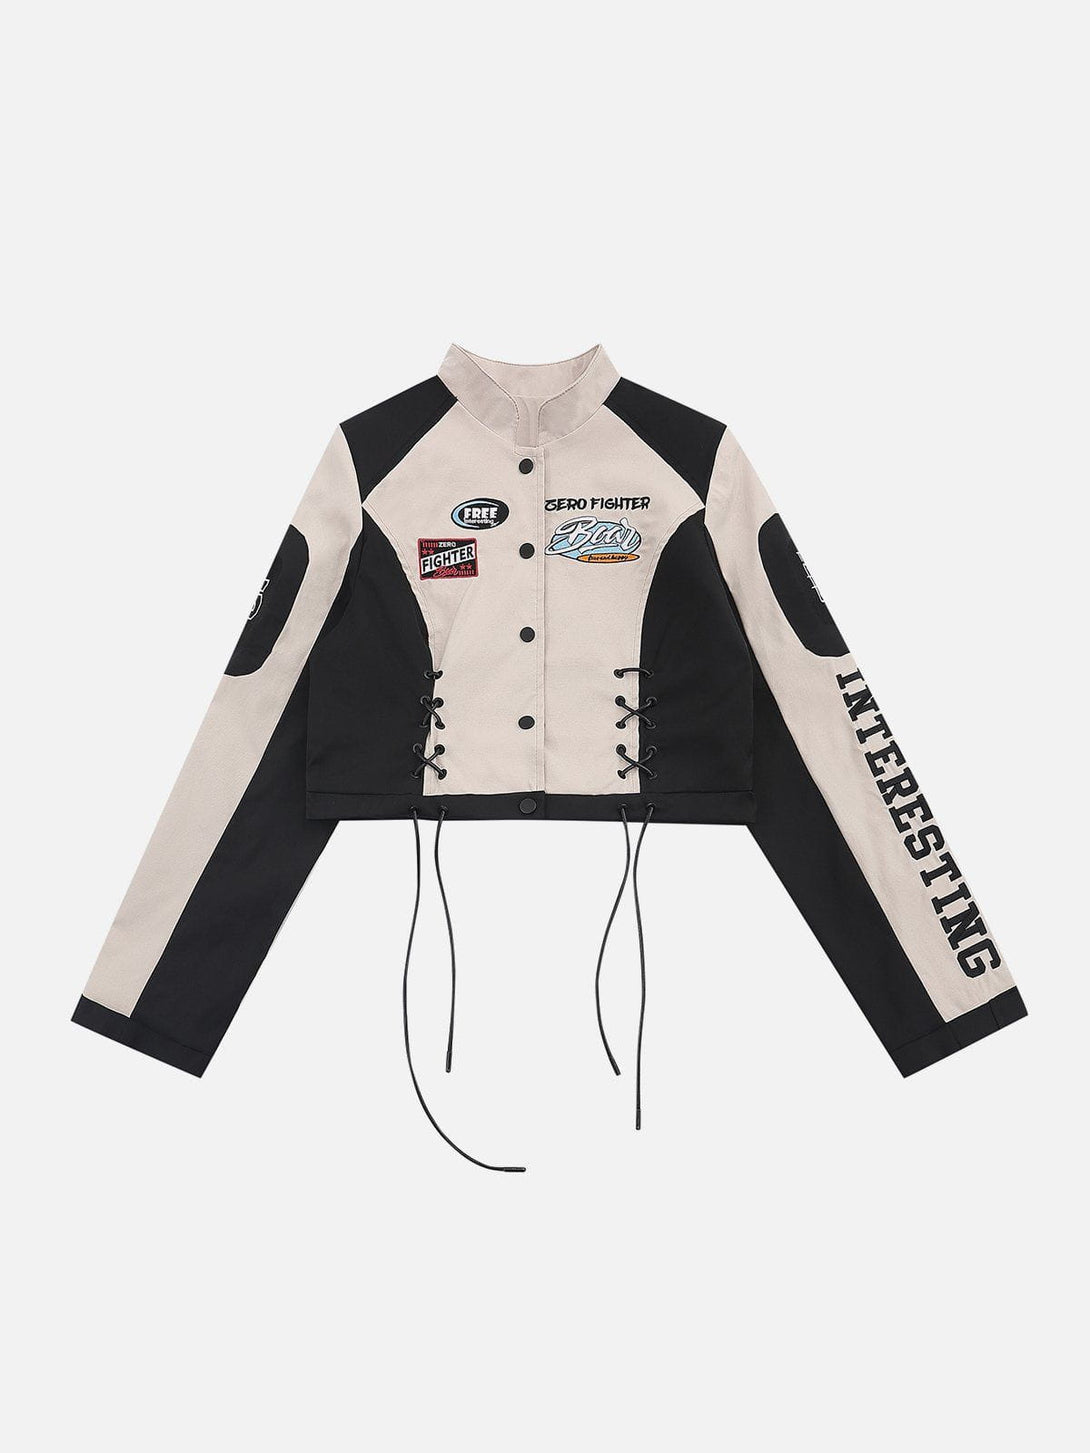 Levefly - Racing Jacket Set - Streetwear Fashion - levefly.com